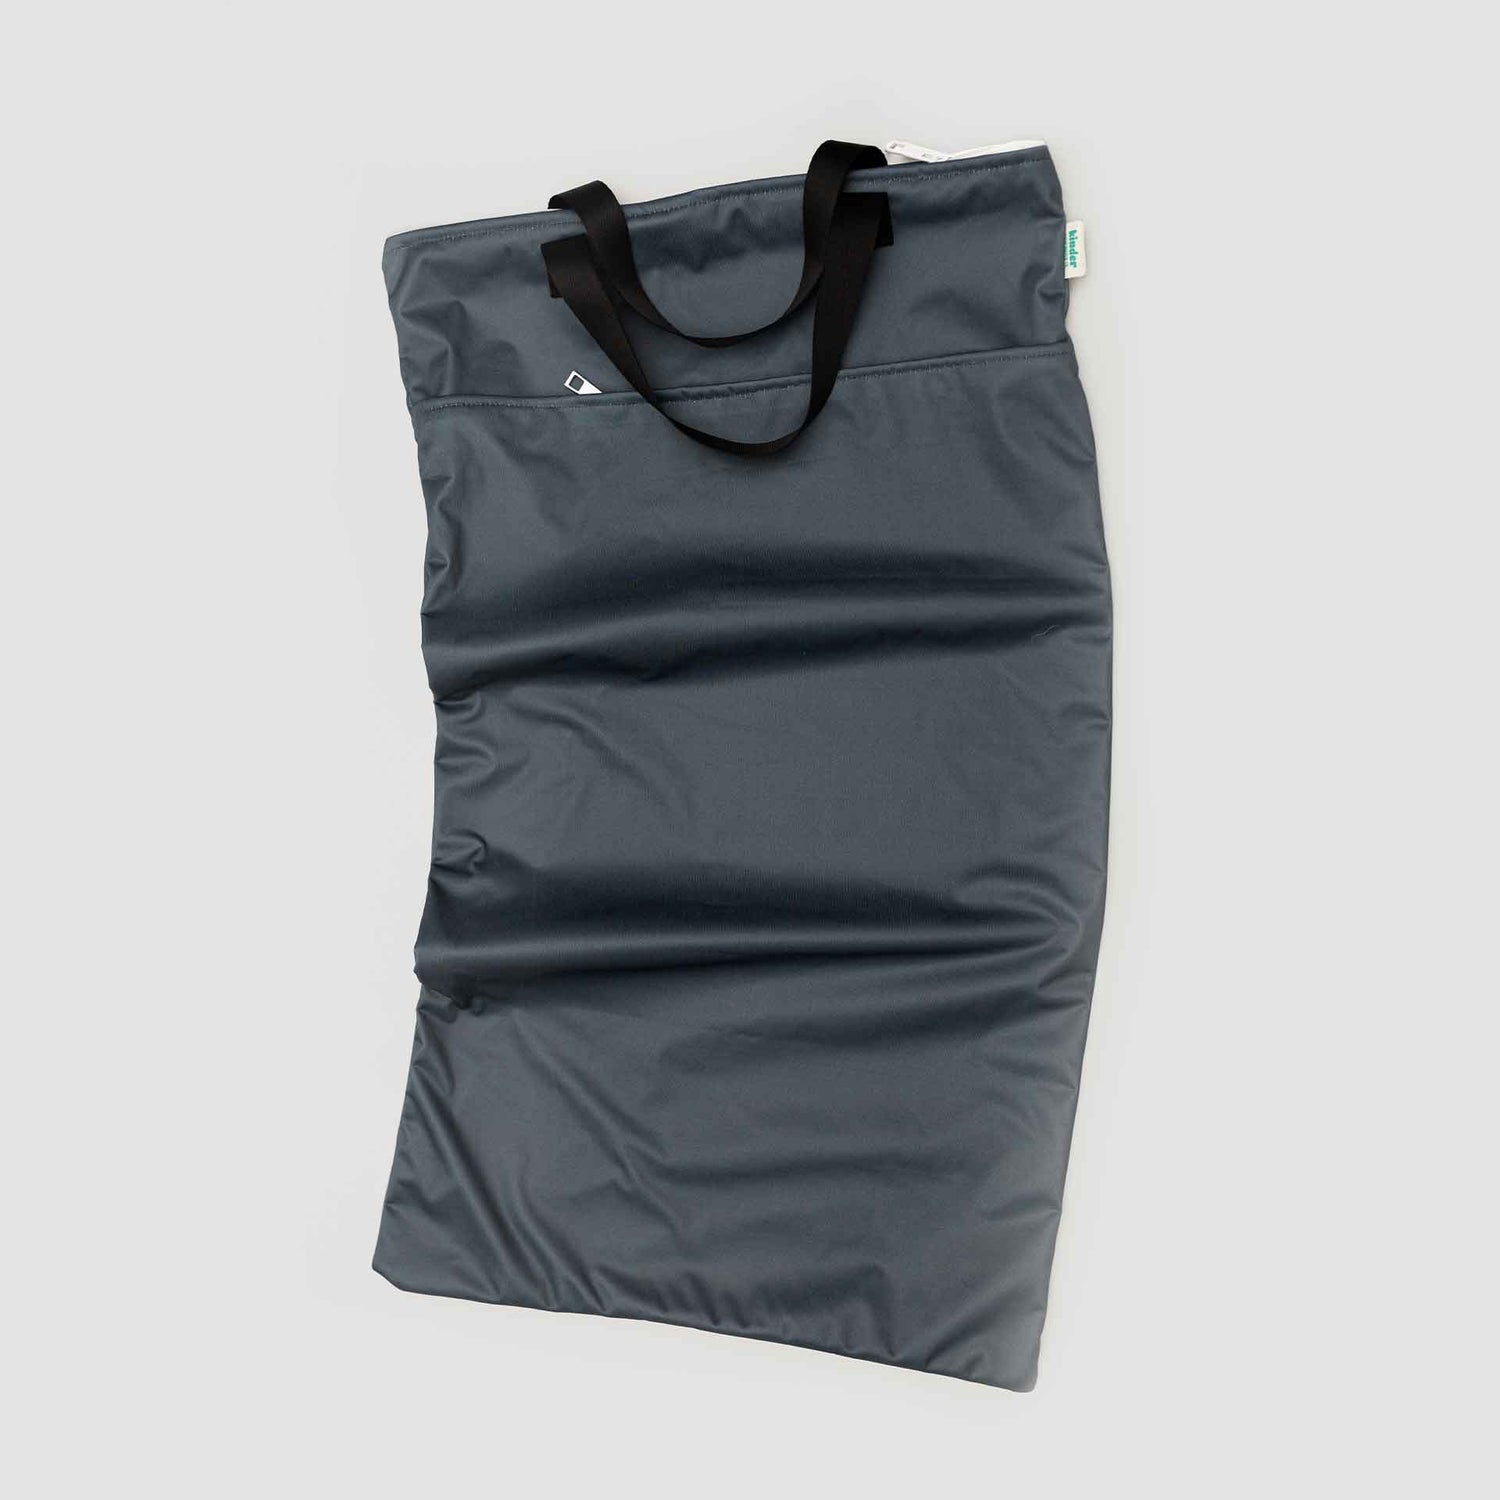 Basics Large Zipper Hanging Wet Bag, Laundry Bag with Handles